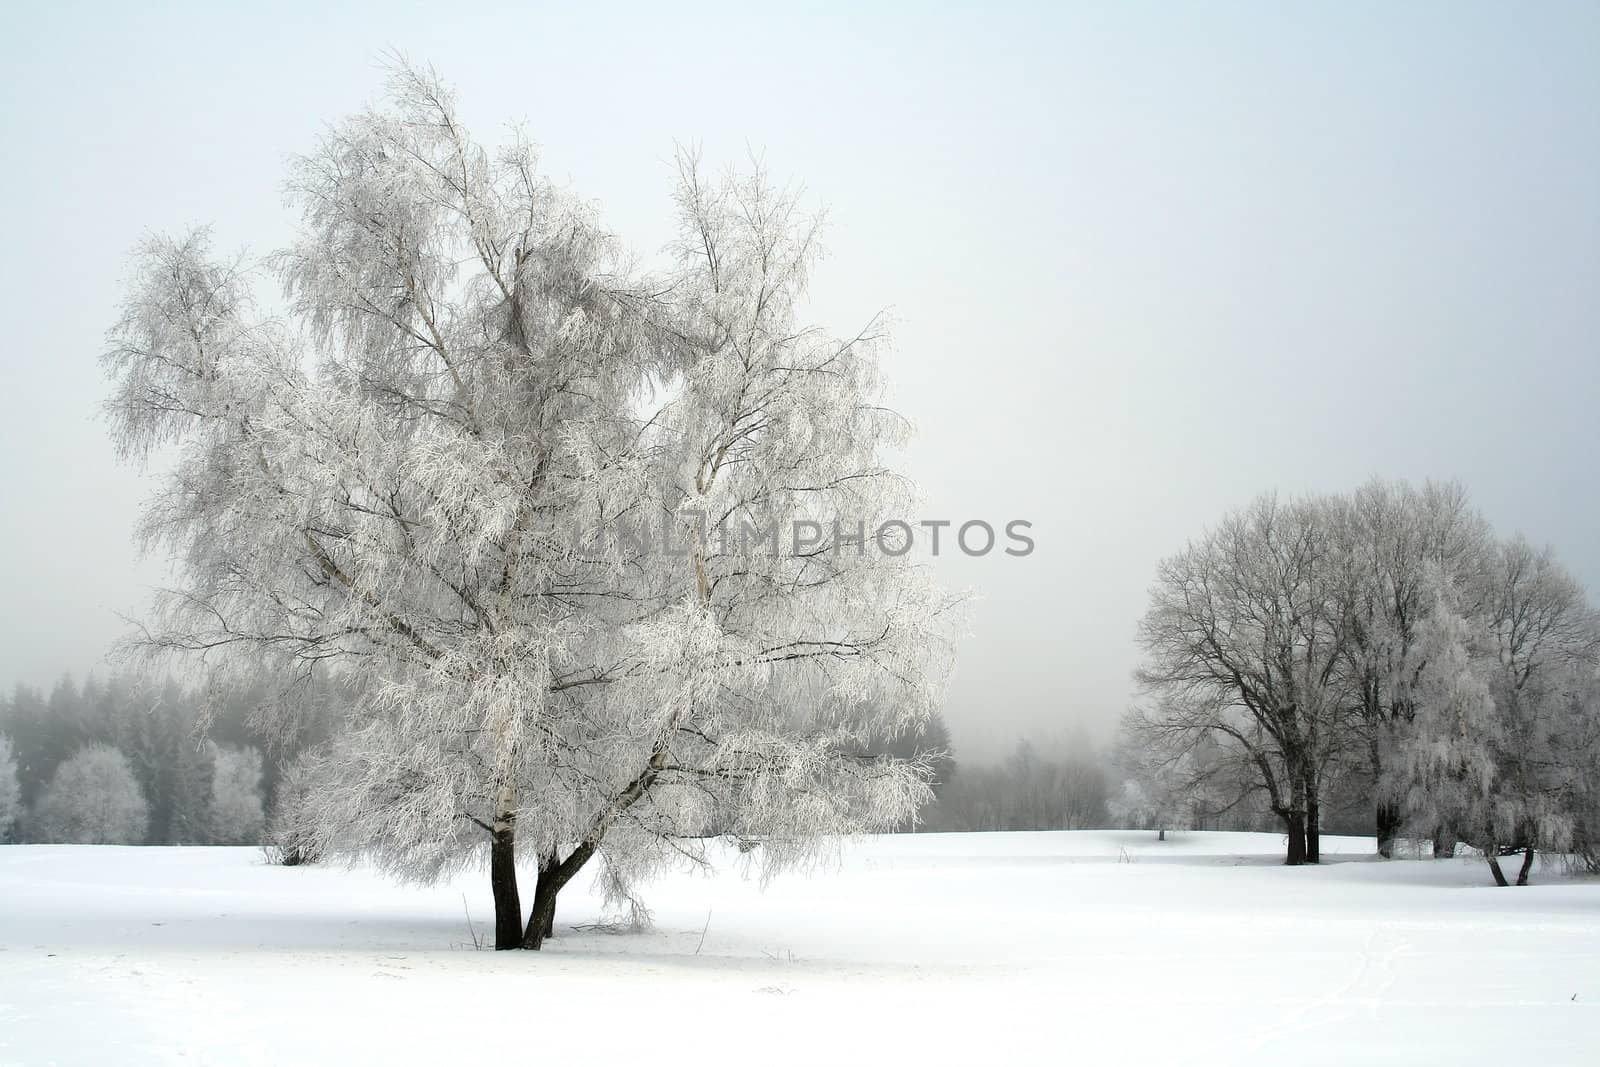 snow landscape with trees by zhu_zhu